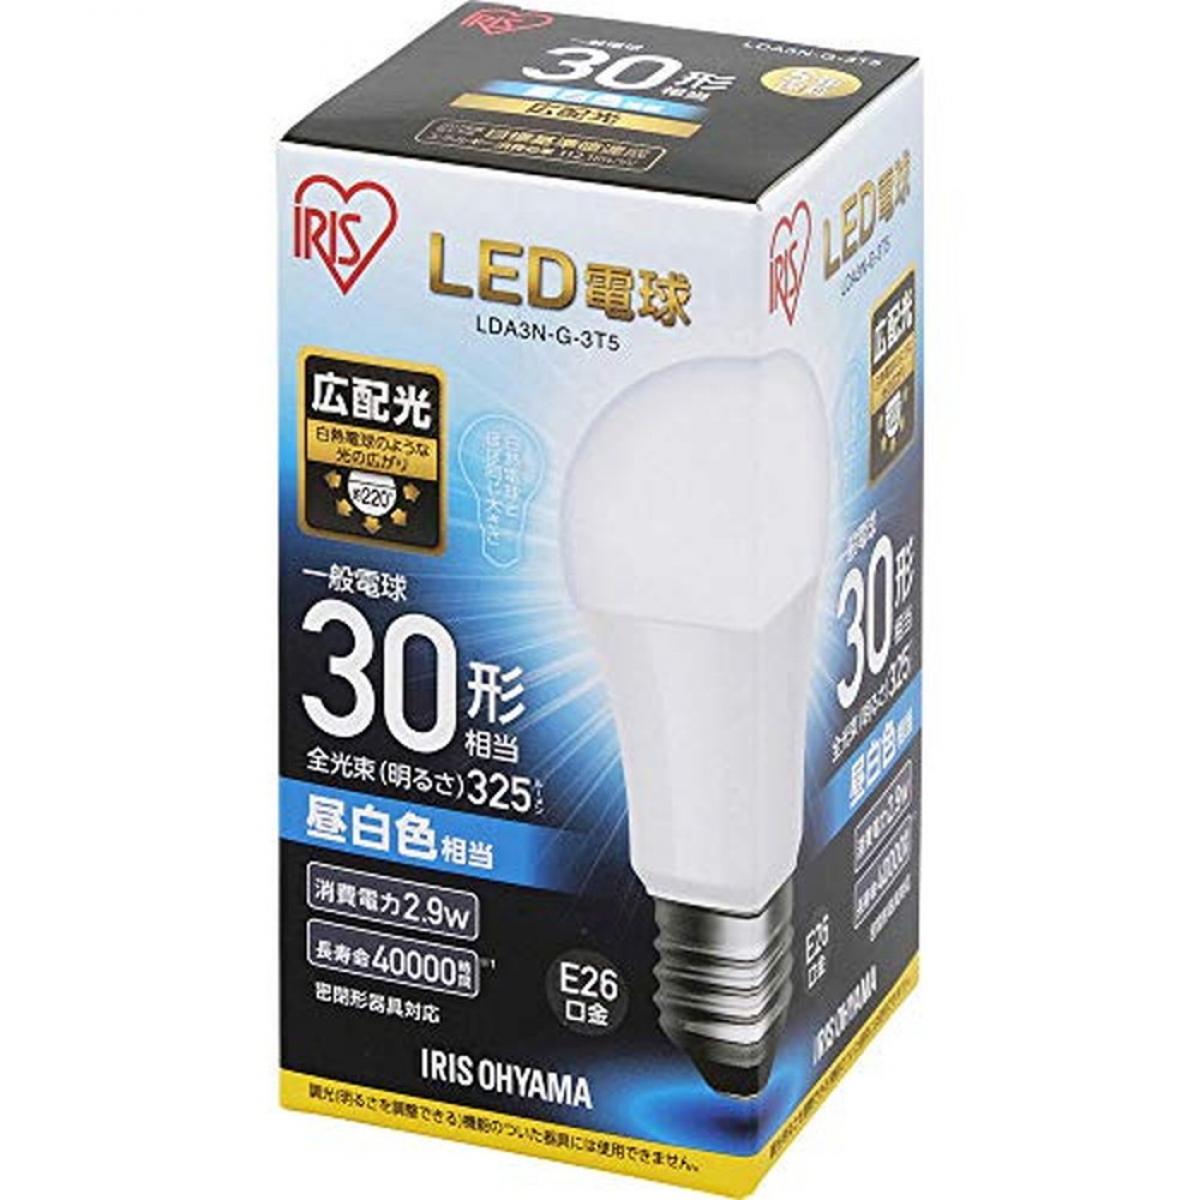 上品 LDA3N-G-3T5 昼白色 30形相当 広配光 E26 LED電球 LED電球